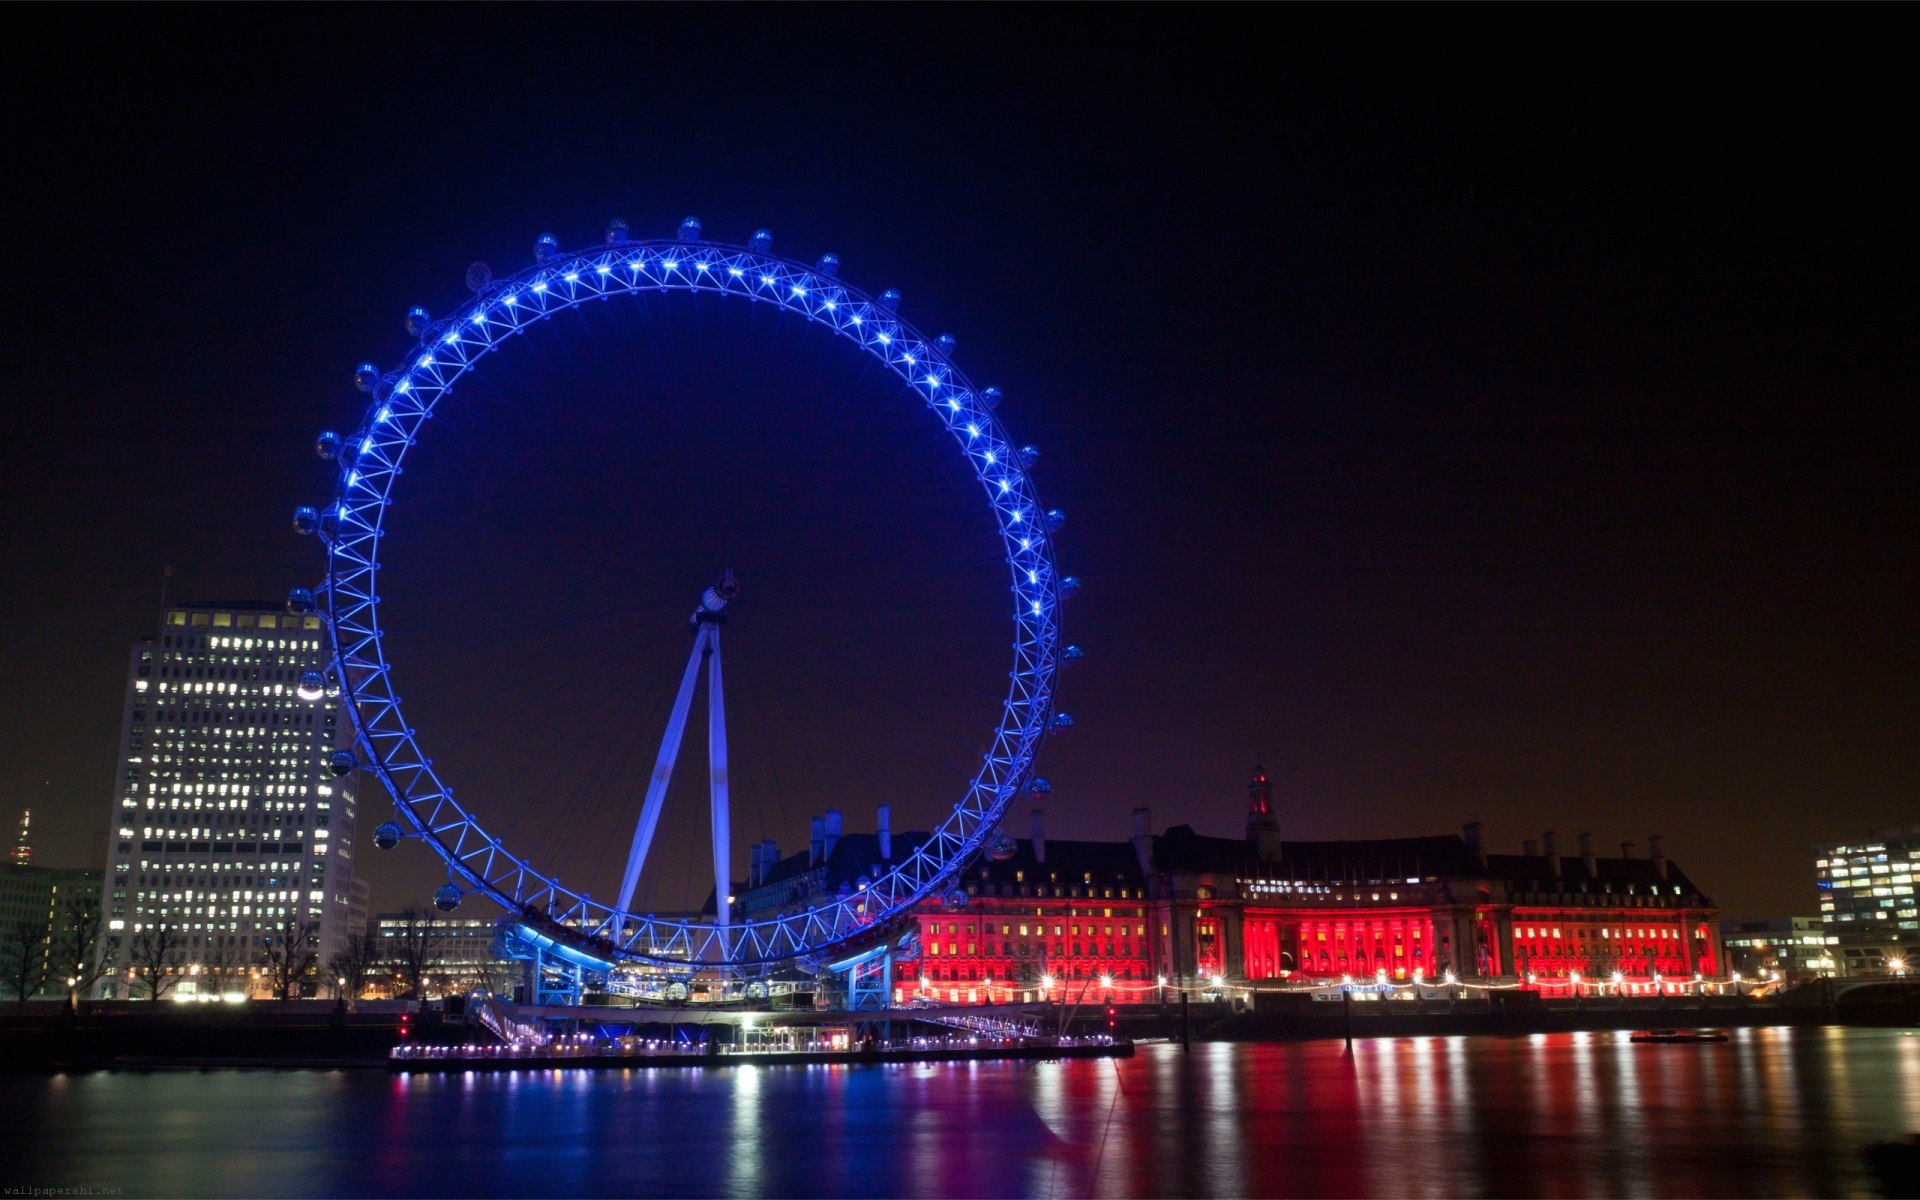 Evening City Lights Lights Illumination Ferris Wheel Buildings Houses Quay River Reflection